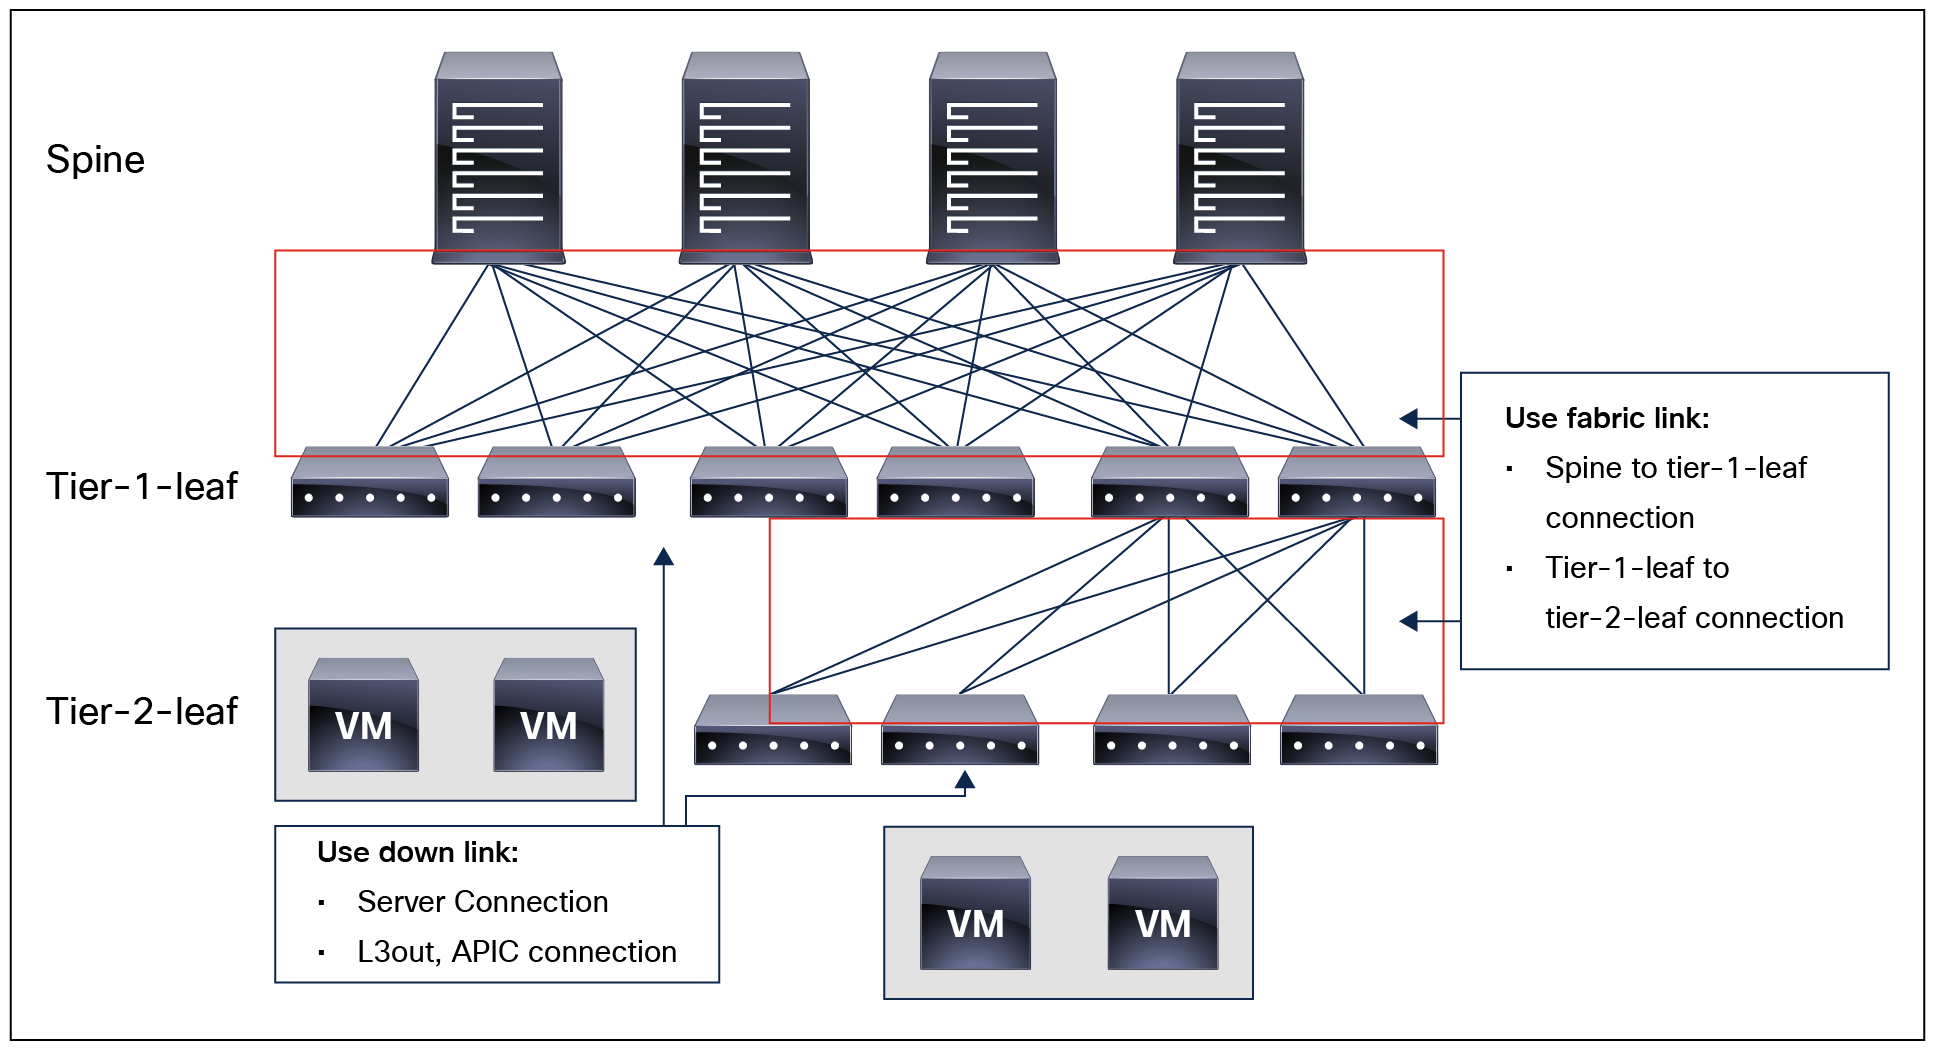 Cisco ACI multi-tier architecture (spine, tier-1 leaf, and tier-2 leaf) topology